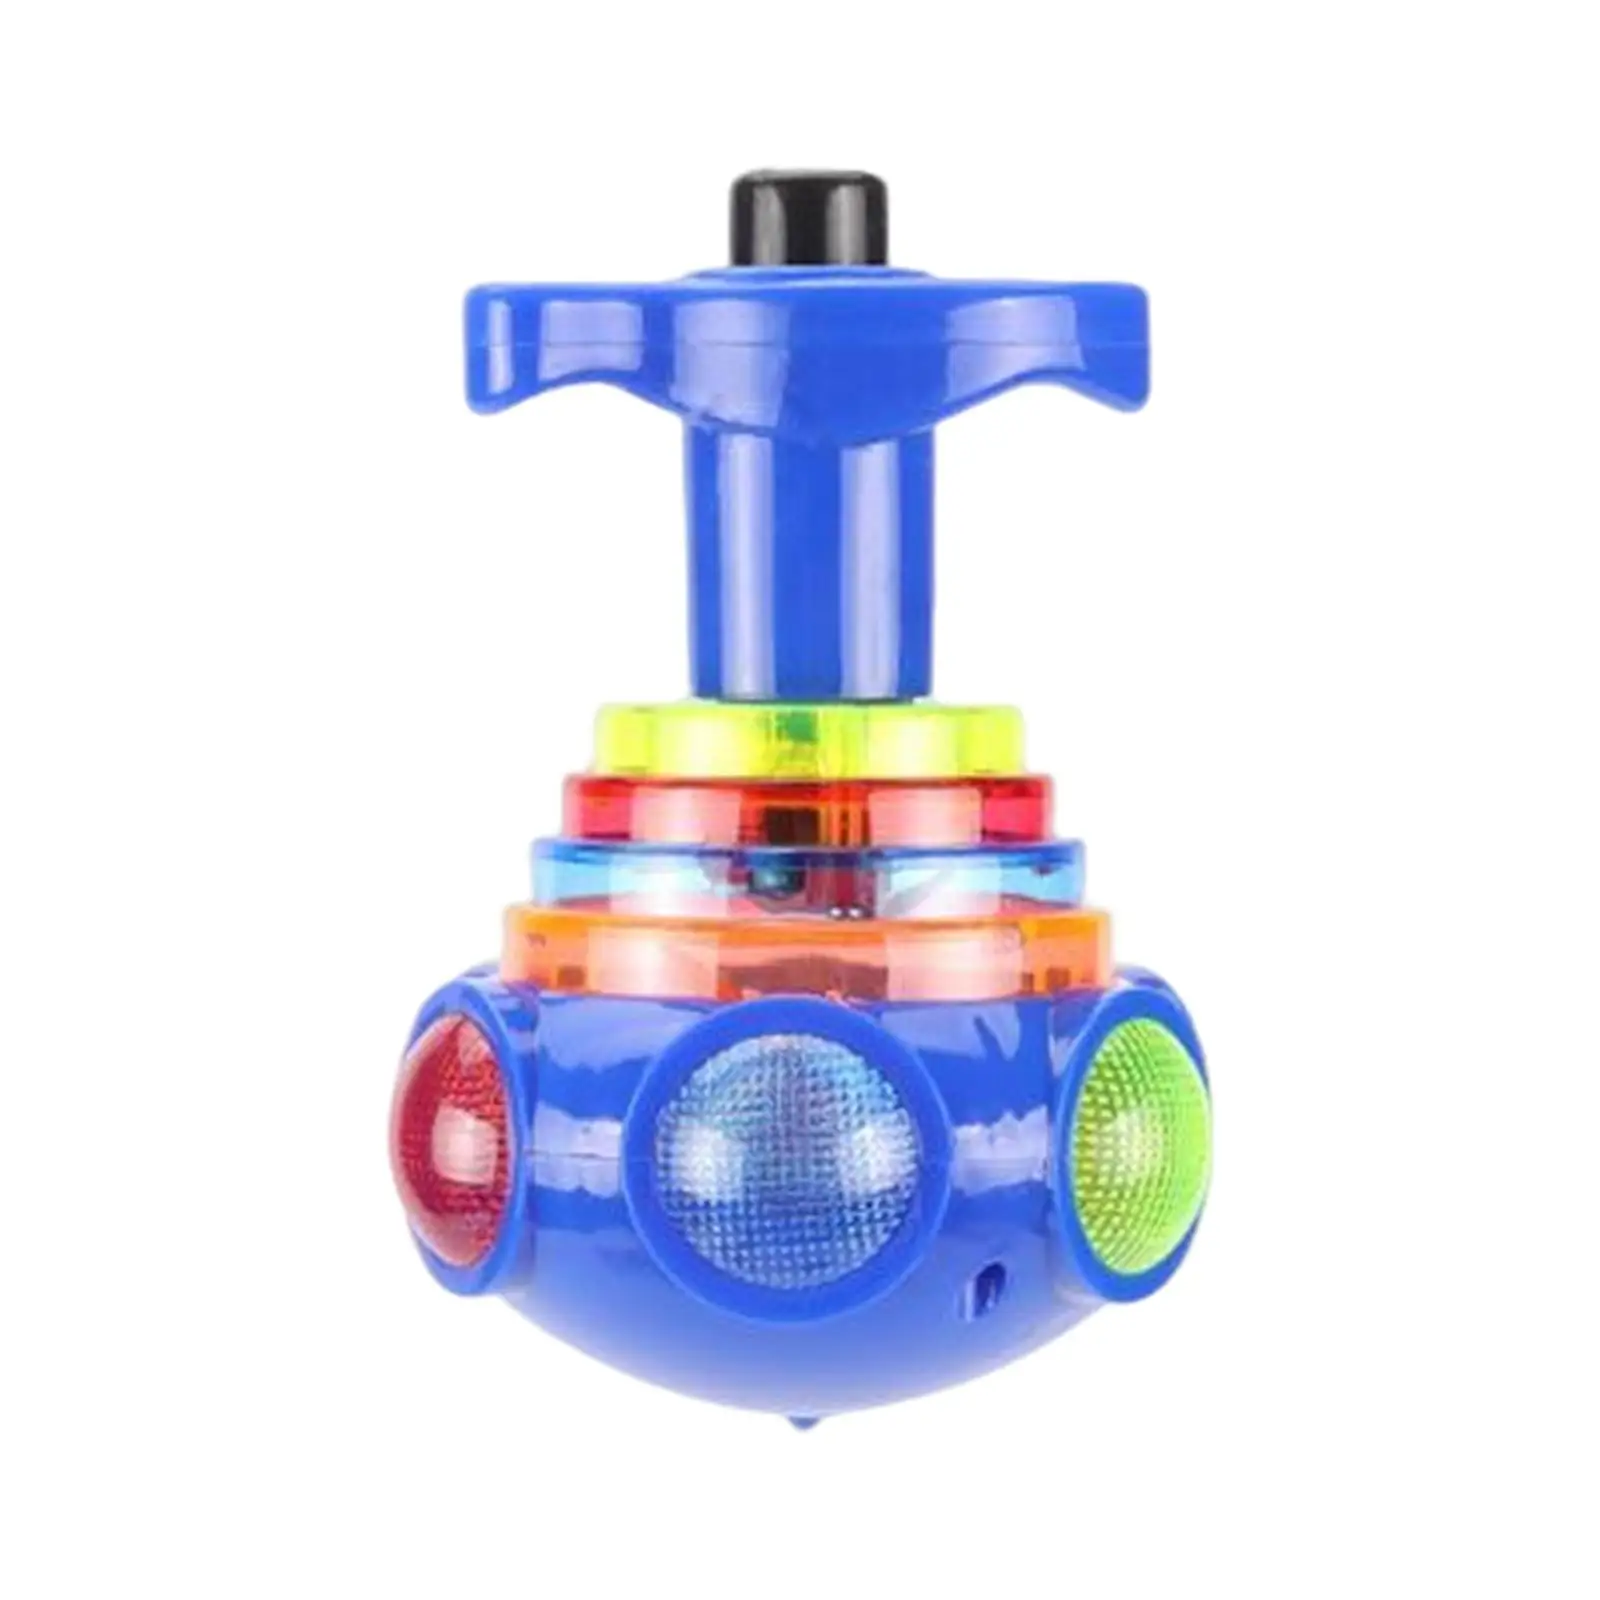 Colorful Gyro Peg Toy Flashing Lights Toy Christmas Kids Gift Spiral